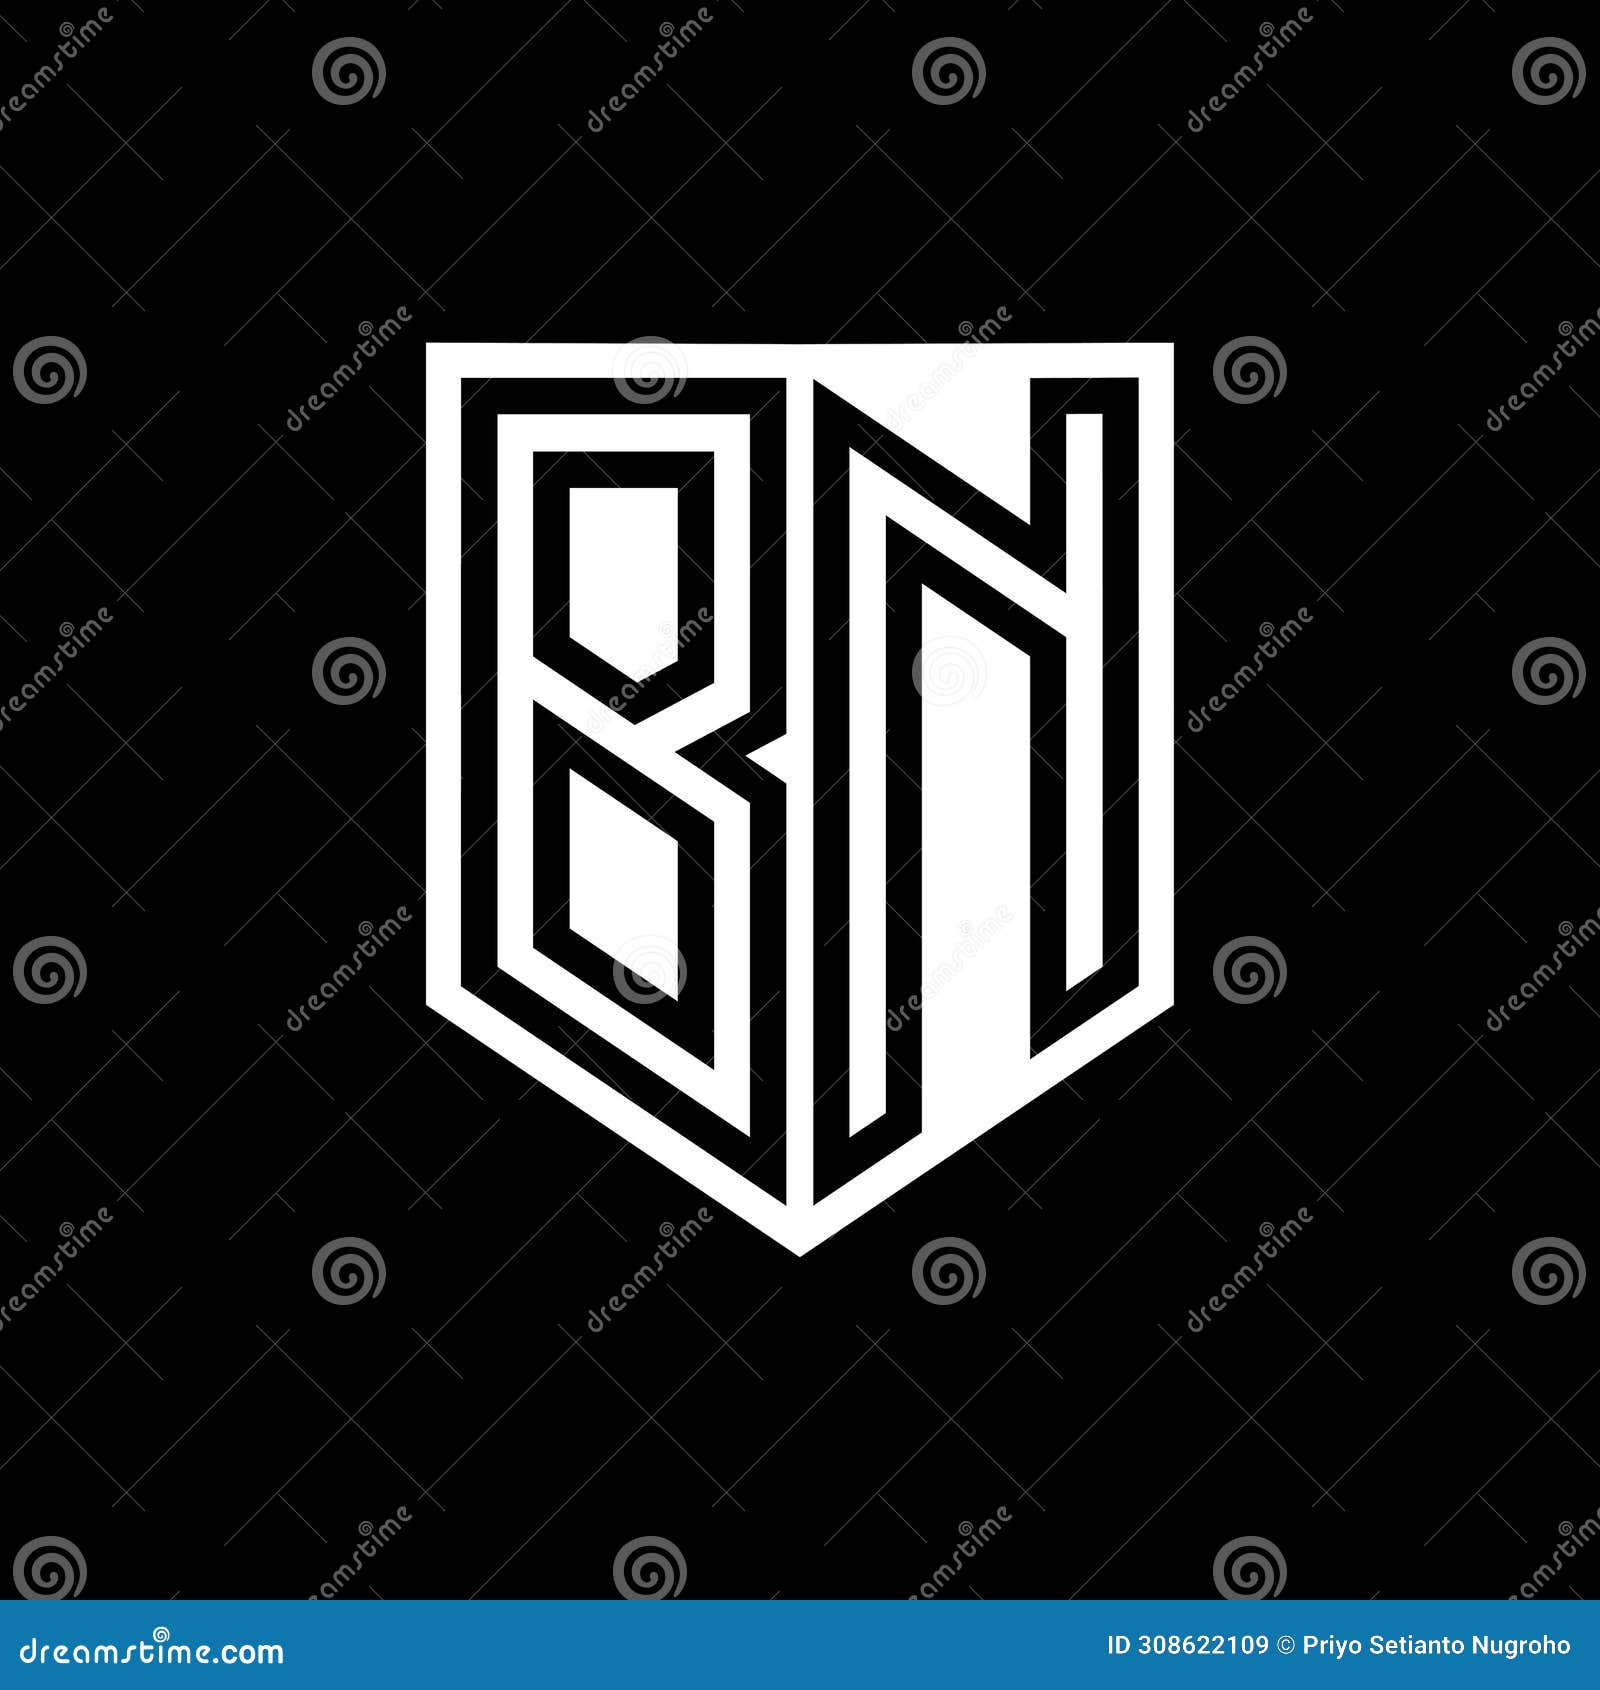 bn logo monogram shield geometric black line inside white shield color 